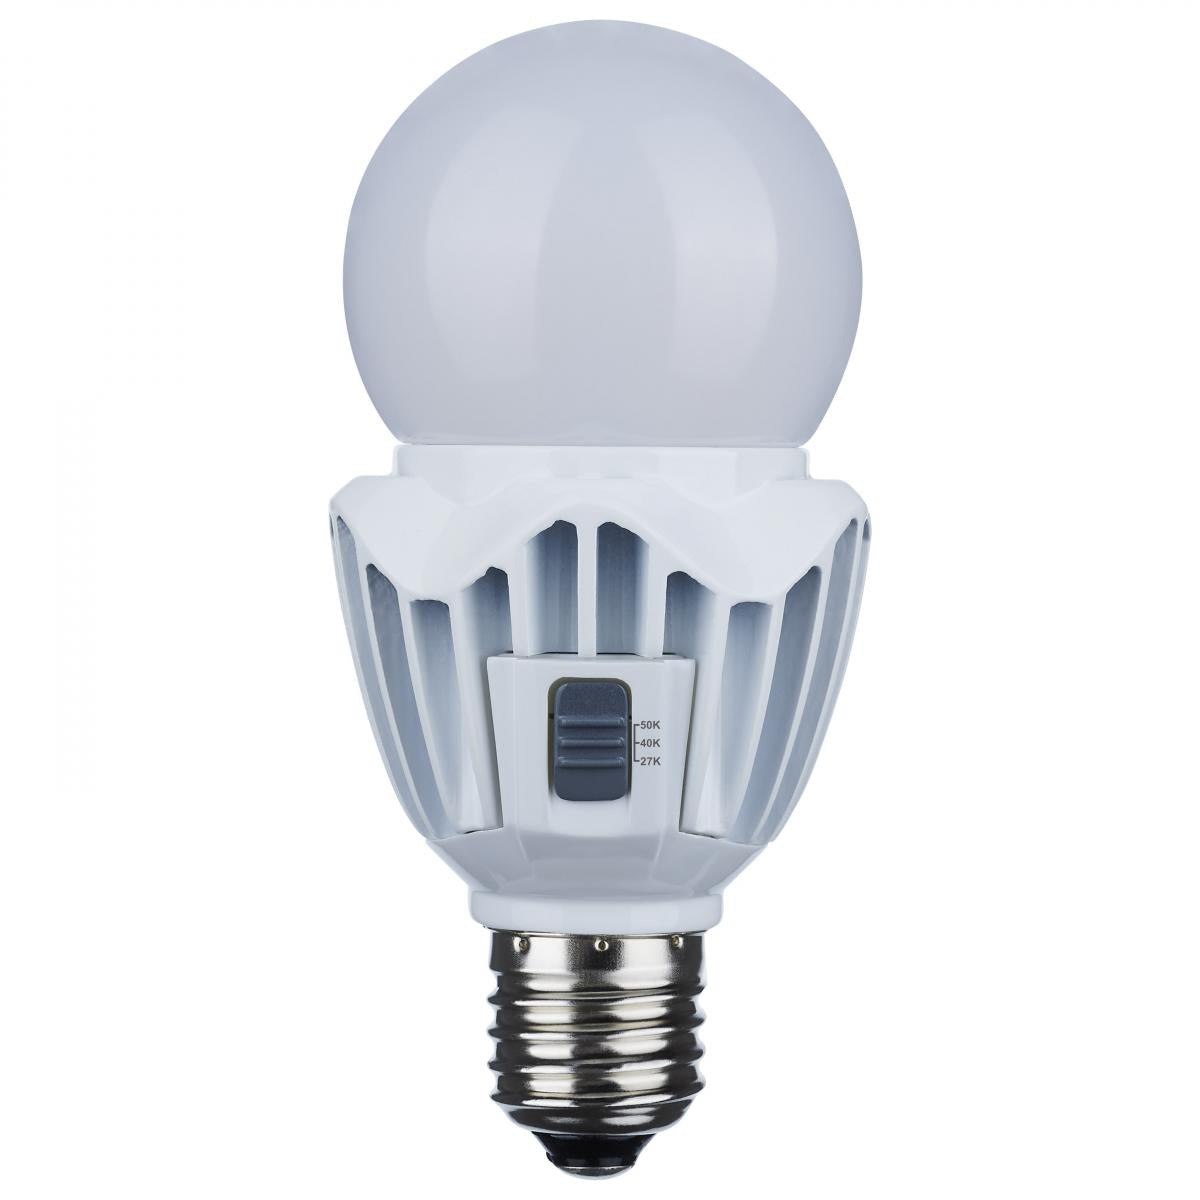 Hi-Pro A21 LED Bulb, 150W HID, 20 Watt, 3020 Lumens, Selectable CCT 27K/40K/50K, E26 Medium Base, Frosted Finish